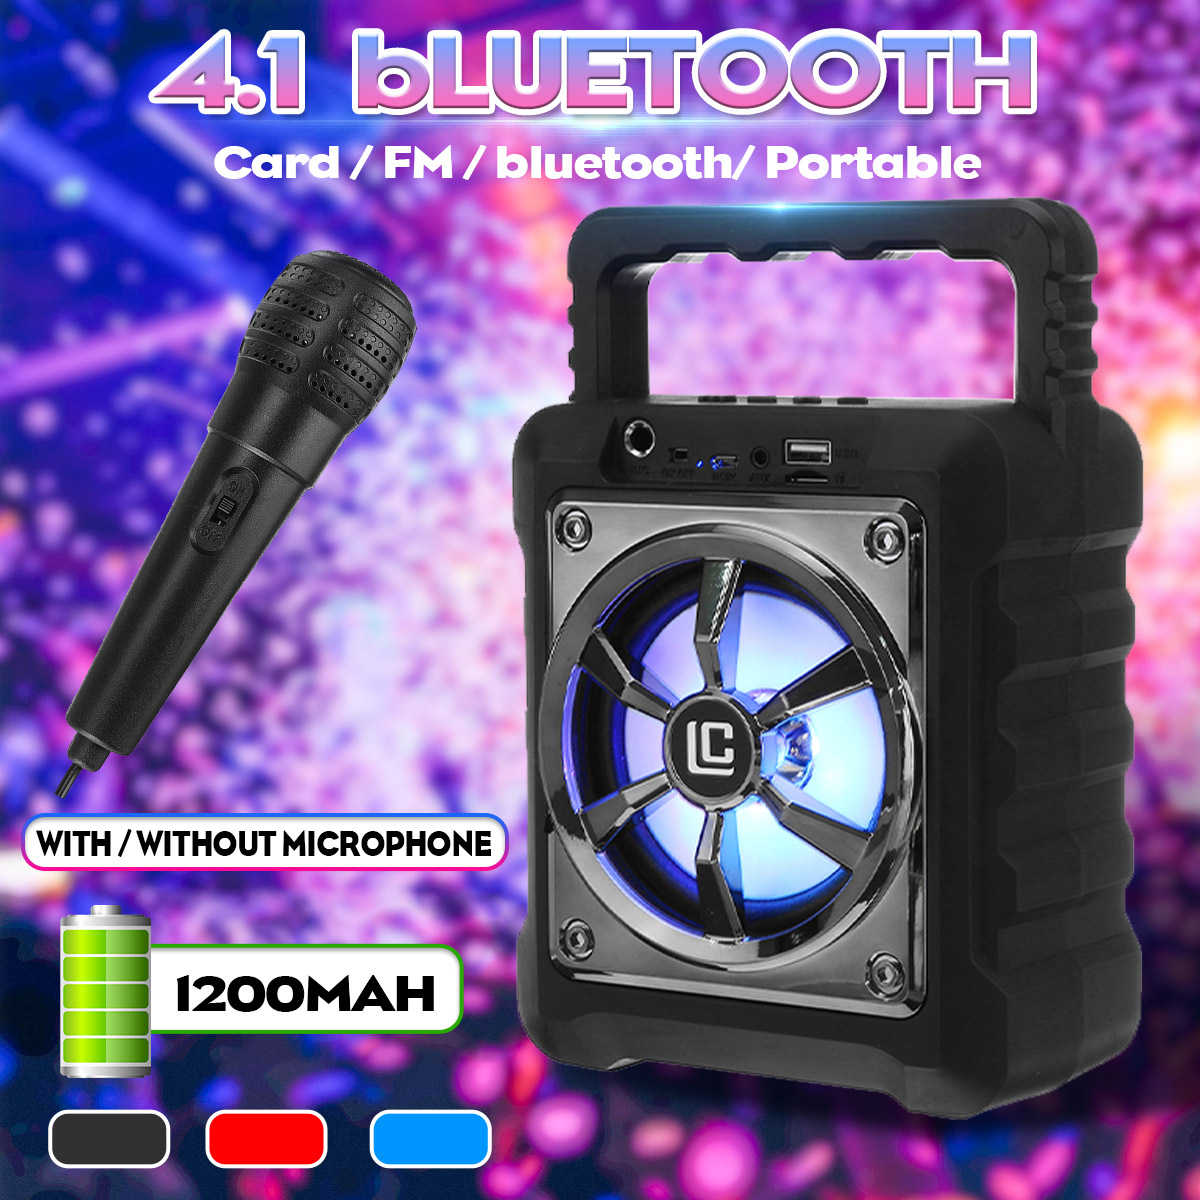 Bakeey-1200mAh-Portable-bluetooth-Hi-Fi-Speaker-Outdoors-Waterproof-AUX-USB-TF-FM-Playing-Loudspeake-1647995-1